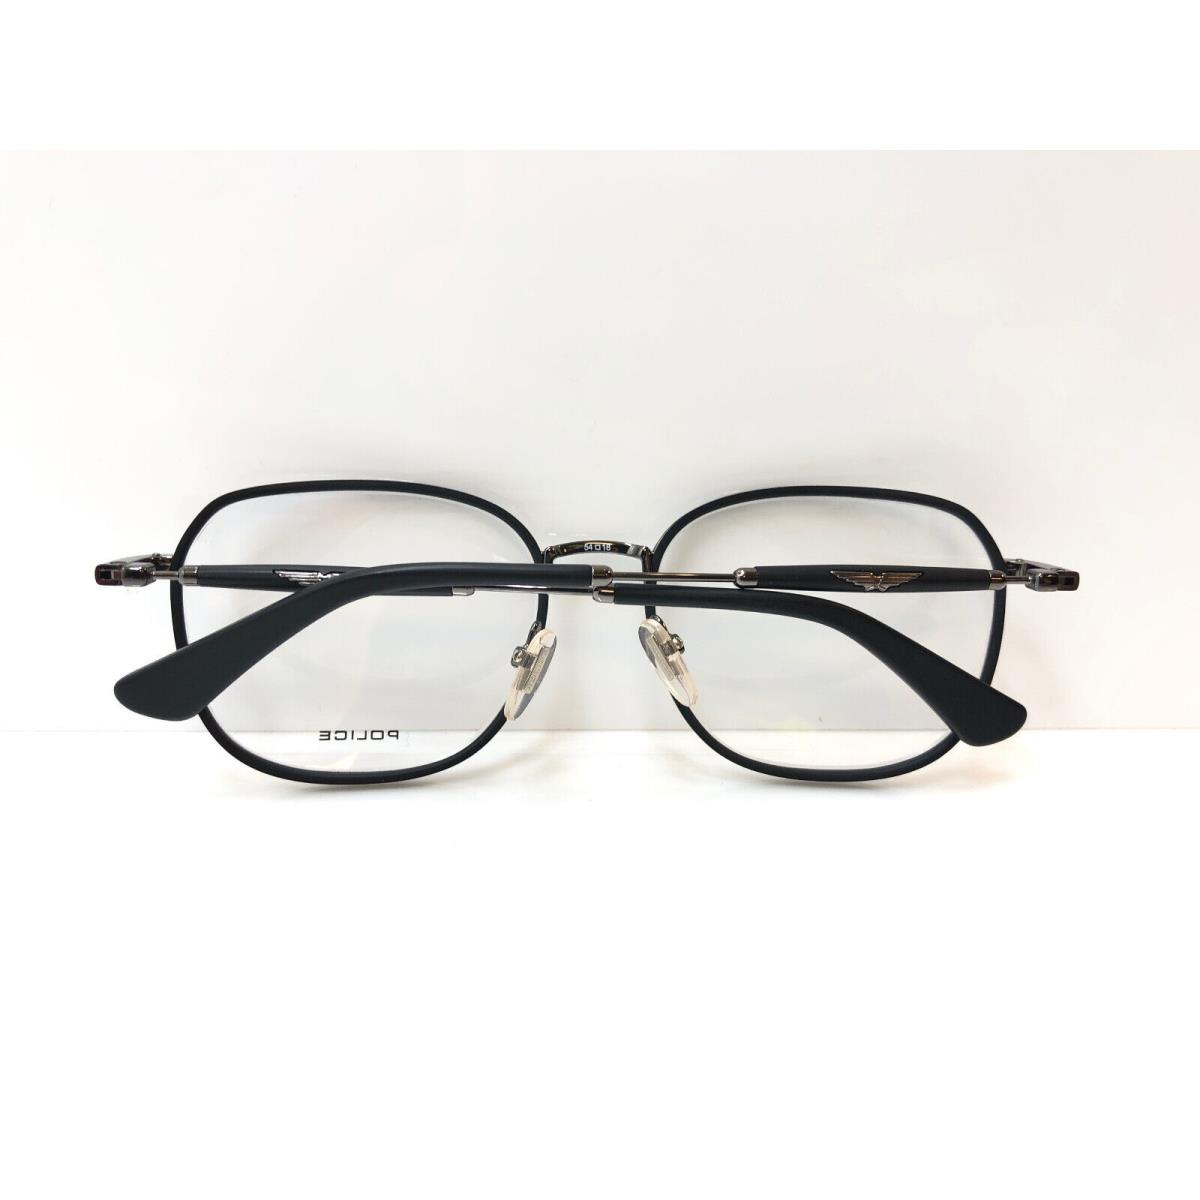 Police eyeglasses  - Black Frame 7